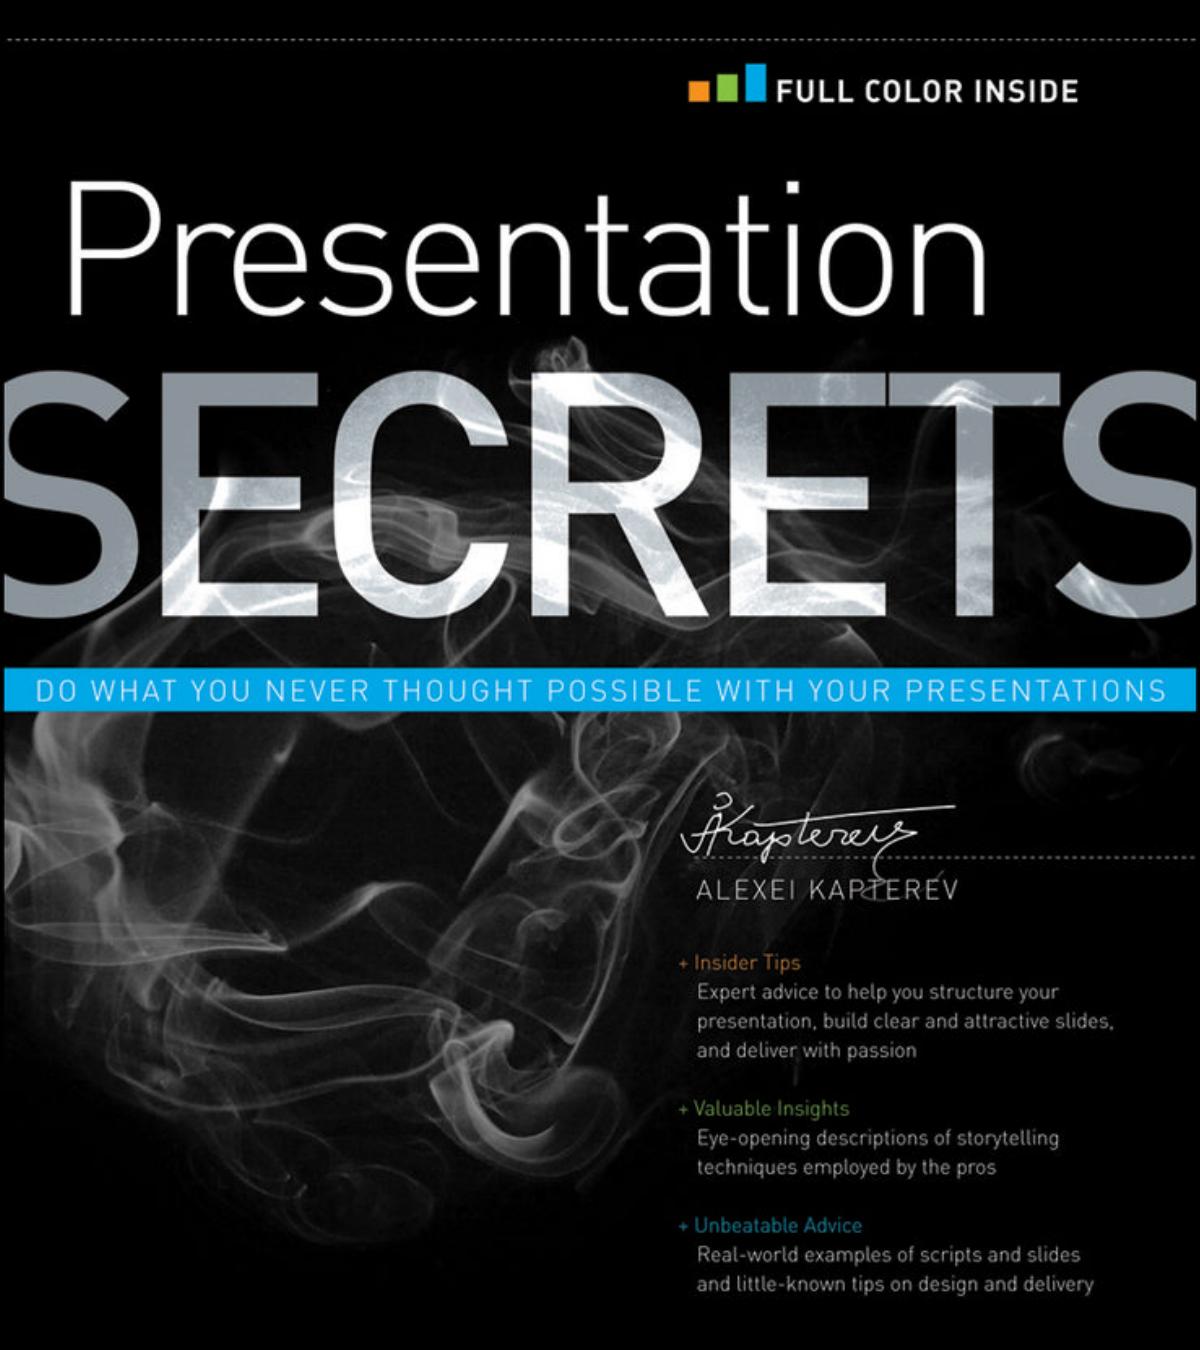 Presentation Secrets by Kapterev Alexei